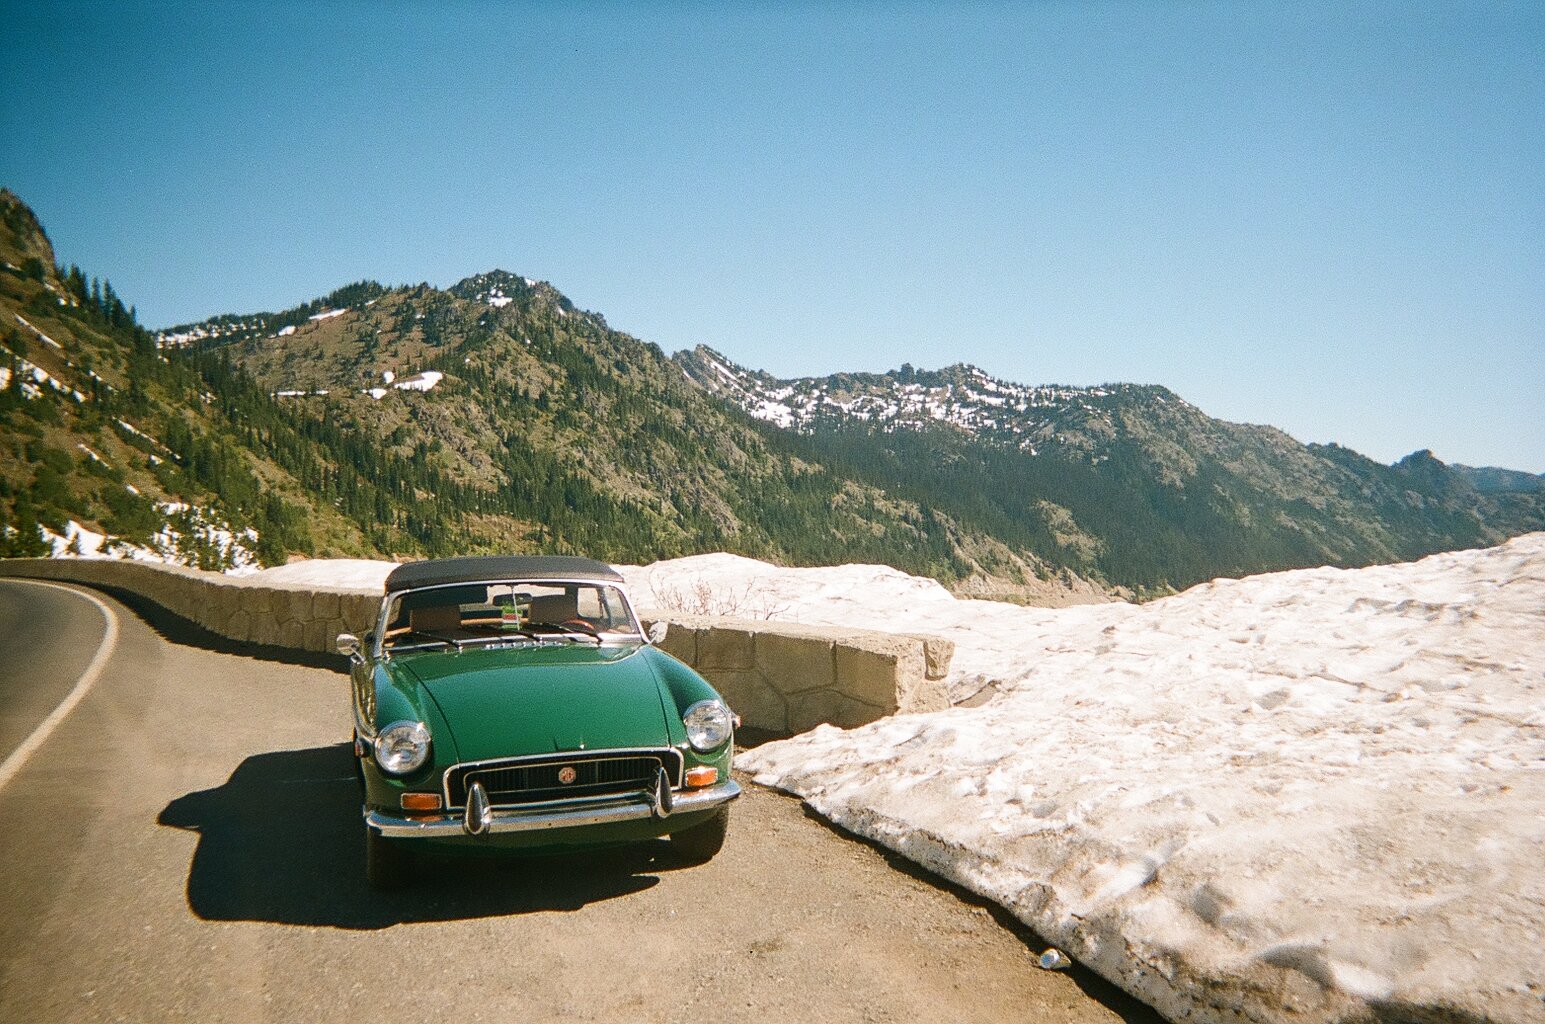  Mount Rainier National Park, Washington. 2021. 